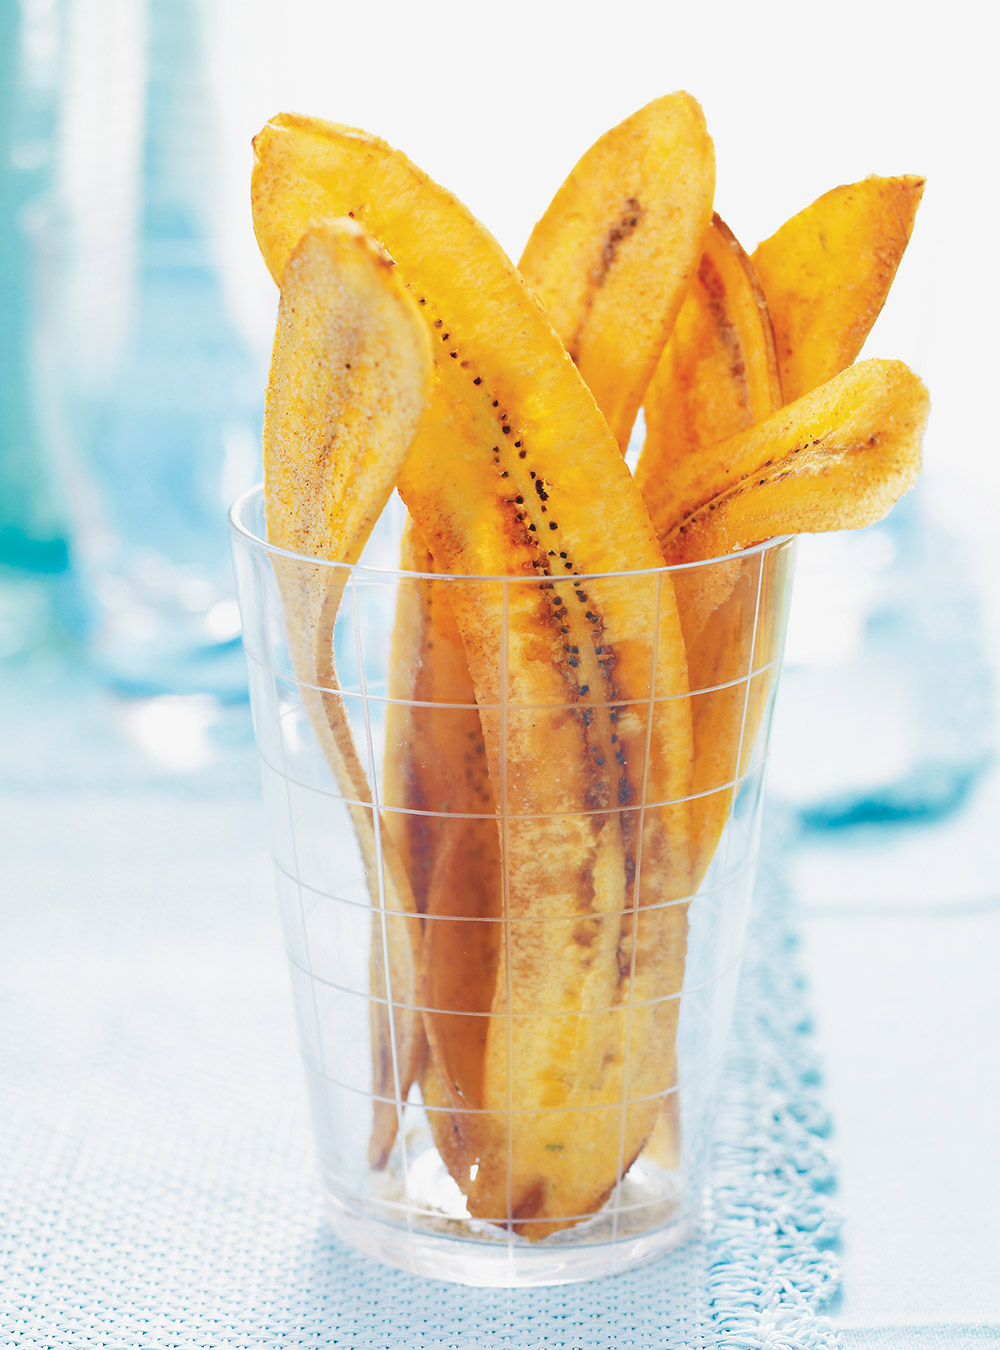 Banane plantain frite et sel à la lime | ricardo